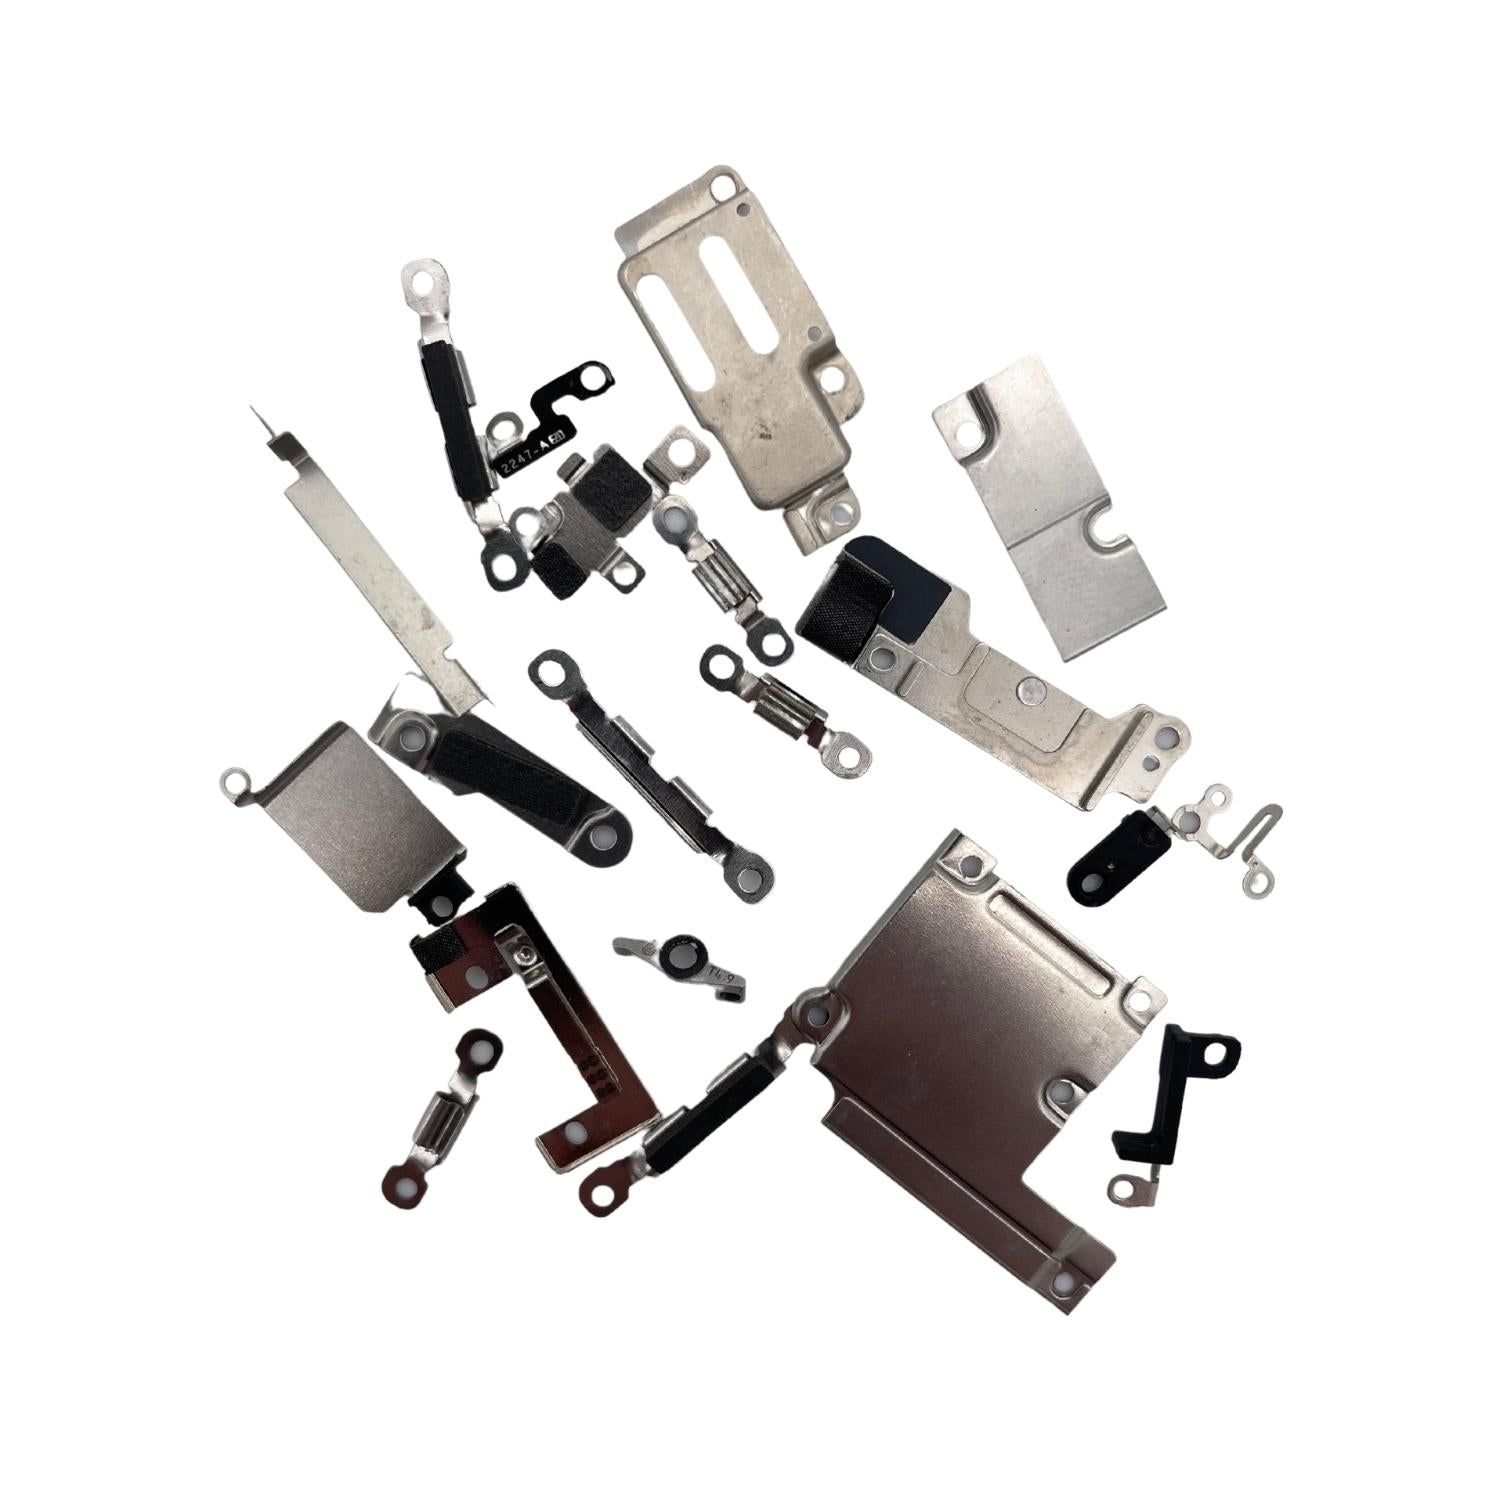 Bracket Sets (Internal Metal Shields) for iPhone 6 Plus